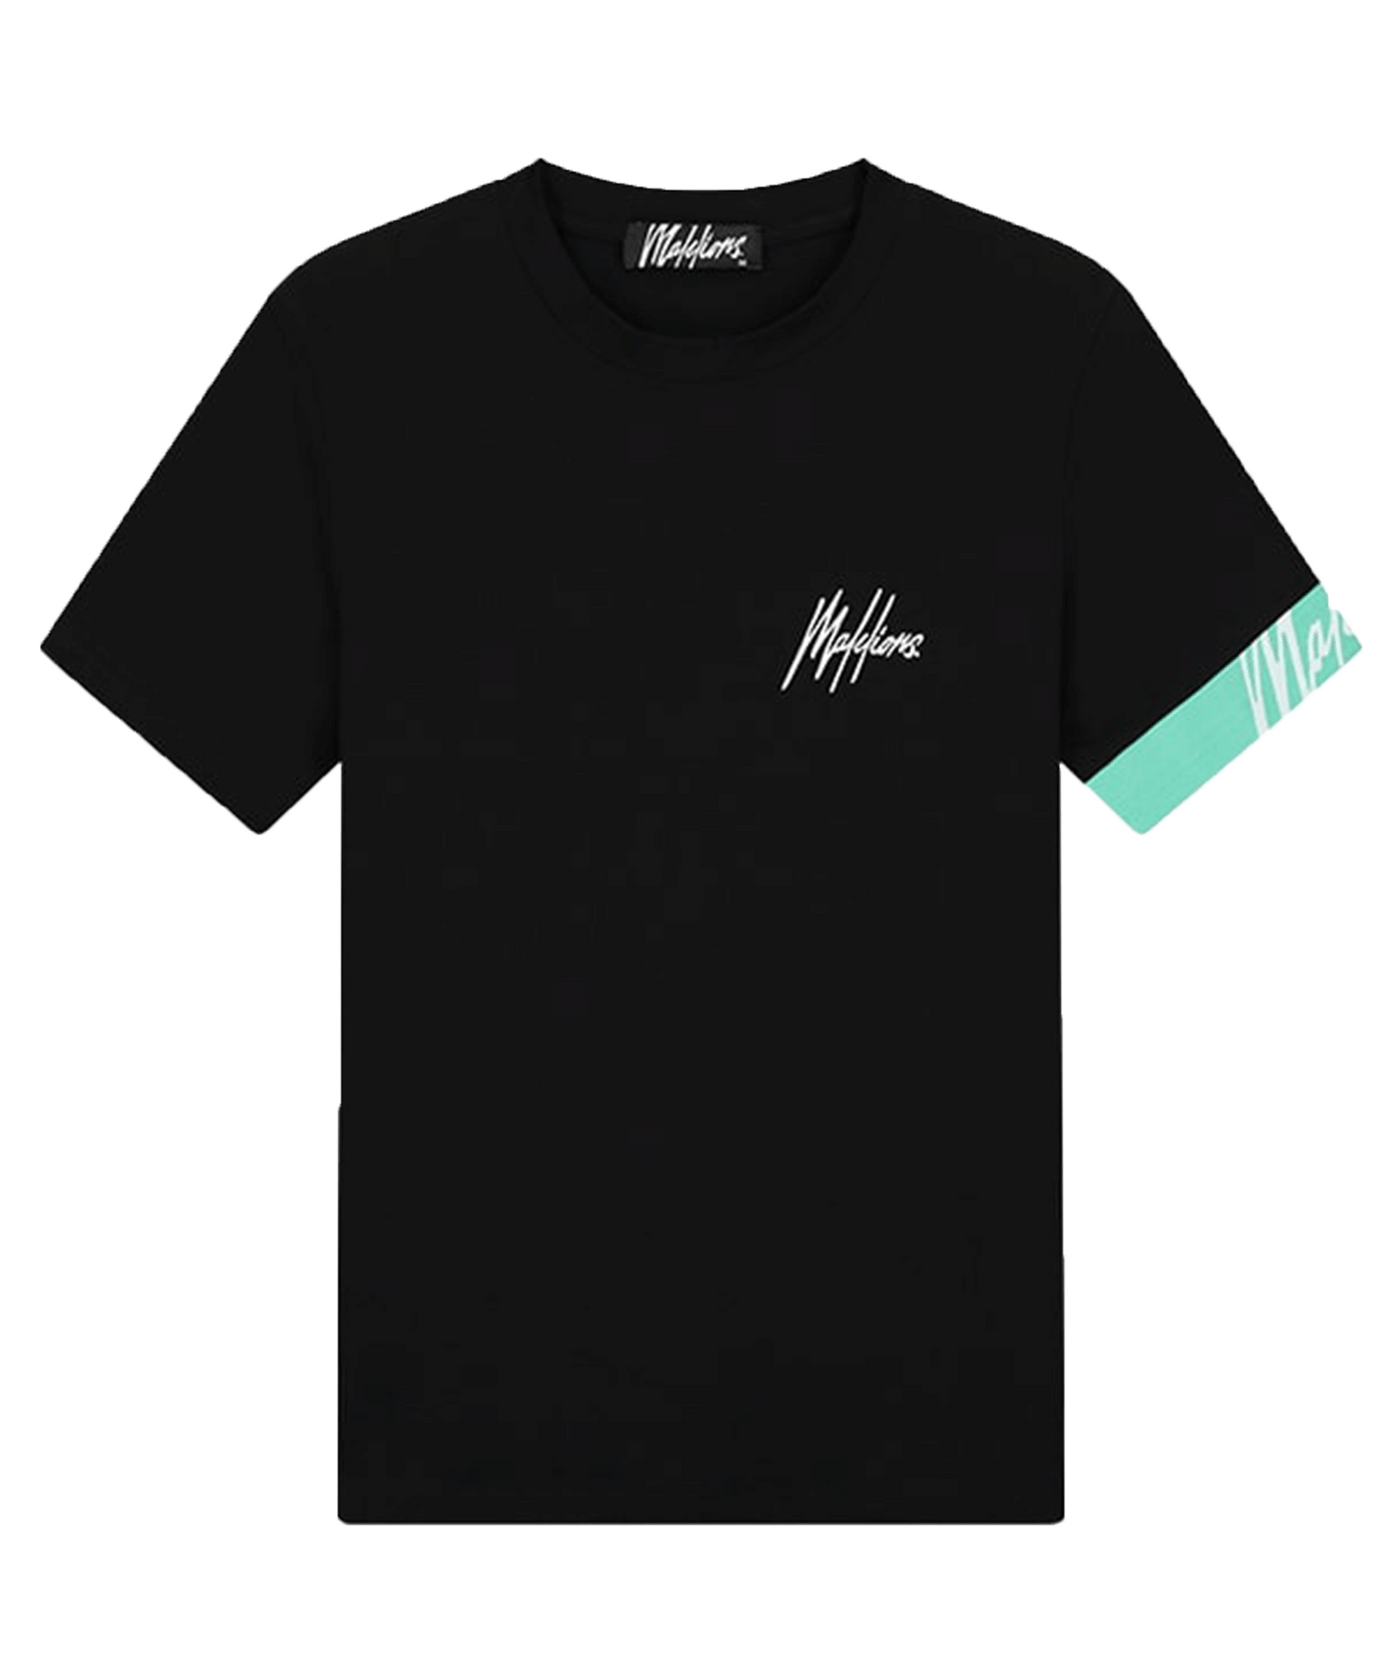 Malelions - Captain 2.0 - T-shirt - Black/turquoise